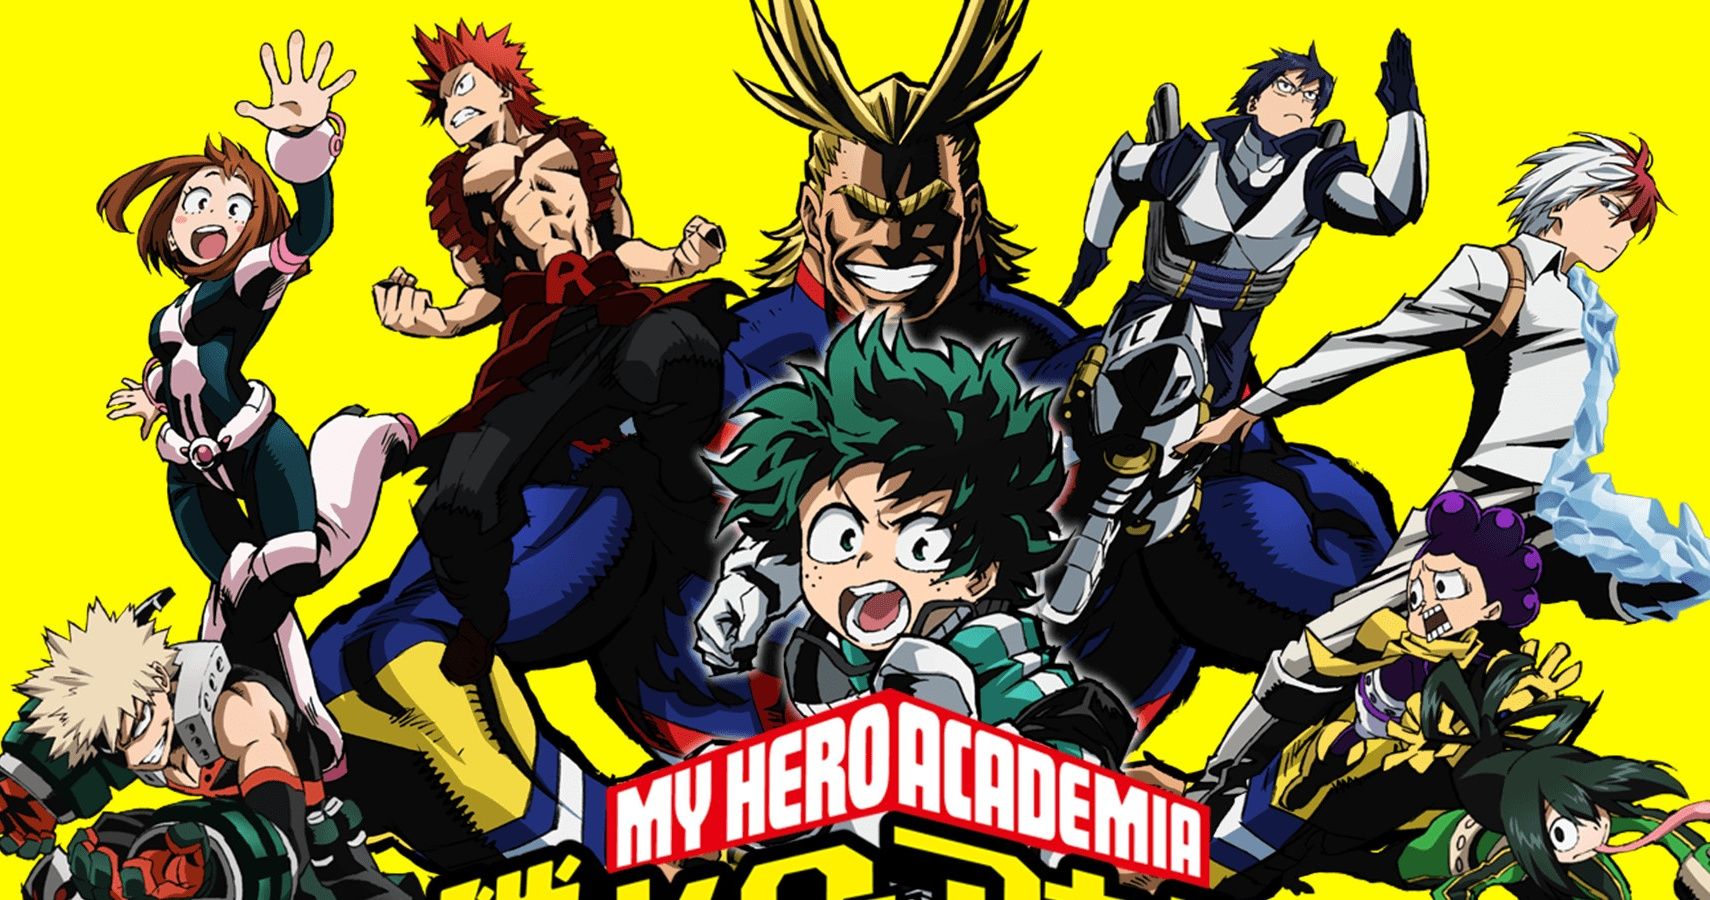 My Hero Academia Full Characters Poster Prints 2020 My Hero Academia ...